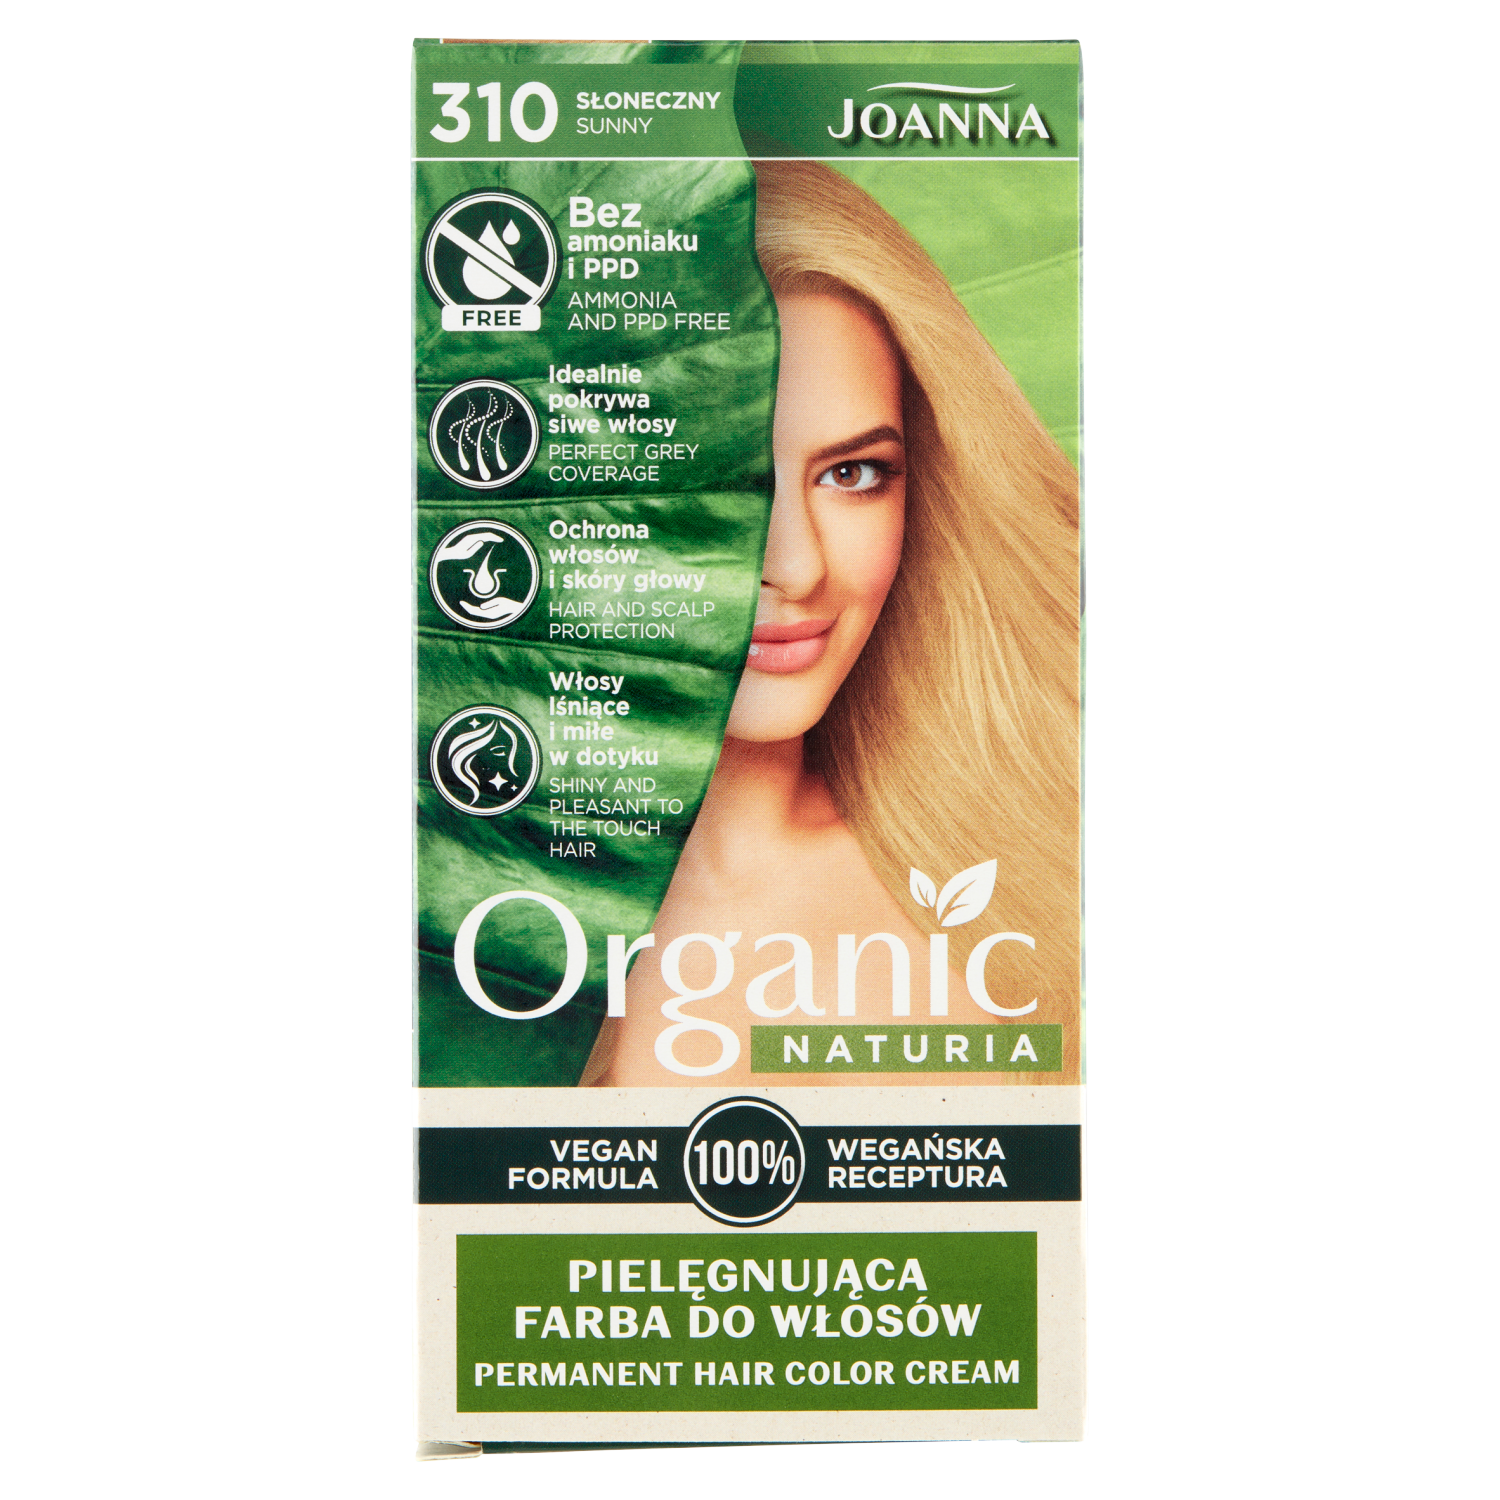 Краска для волос солнечный блондин Joanna Naturia Organic, 310 мл